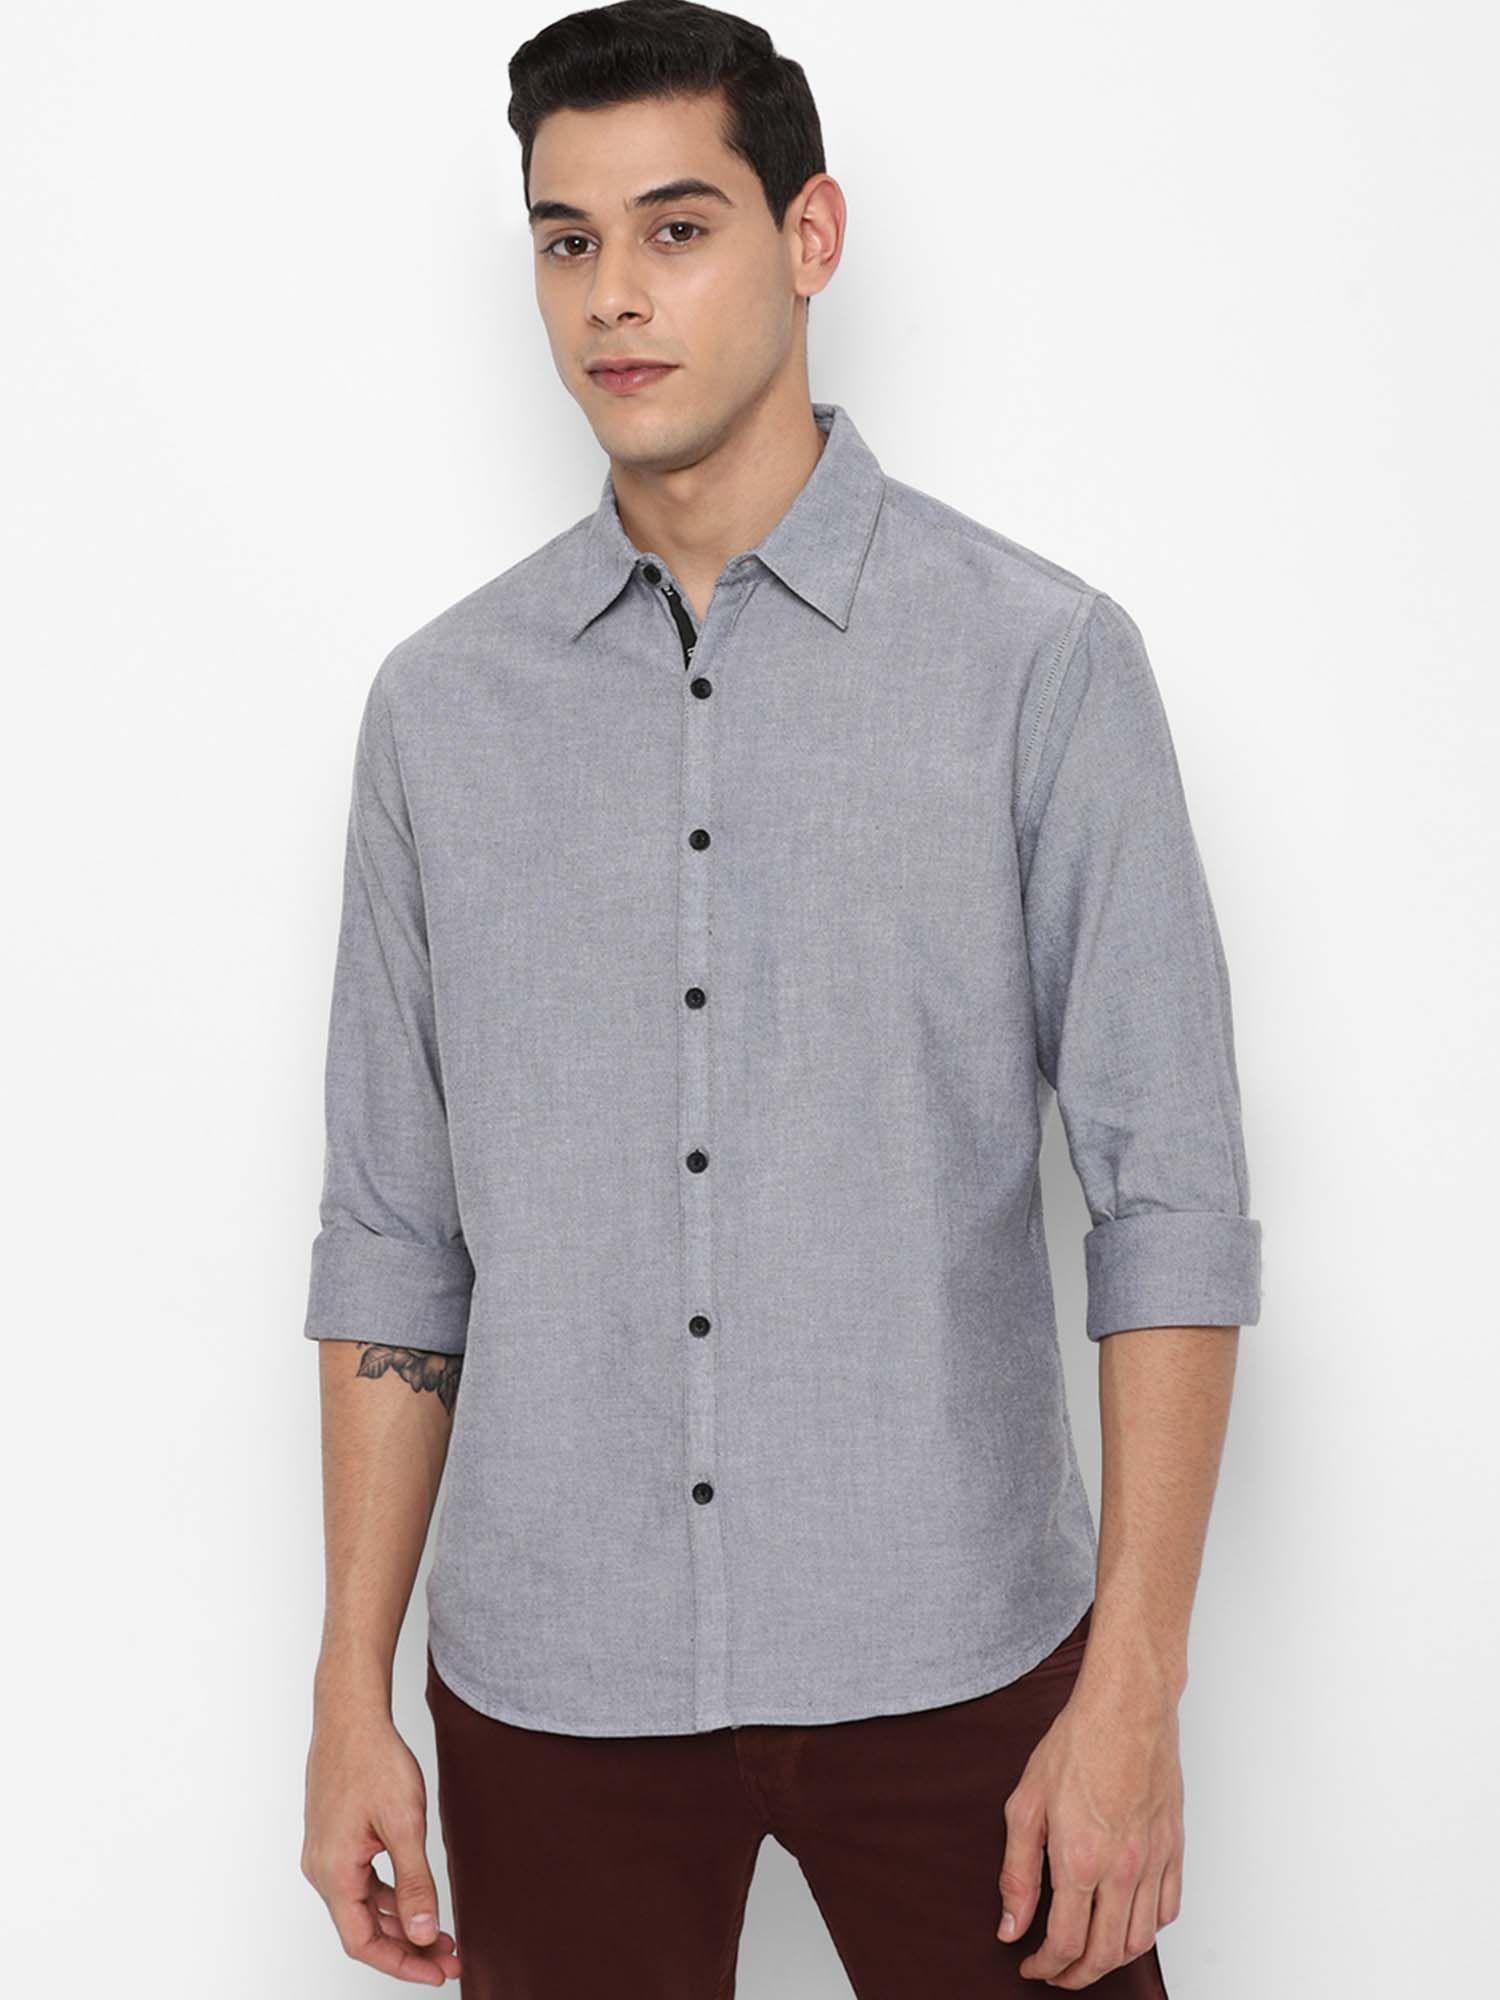 grey-solid-casual-shirt